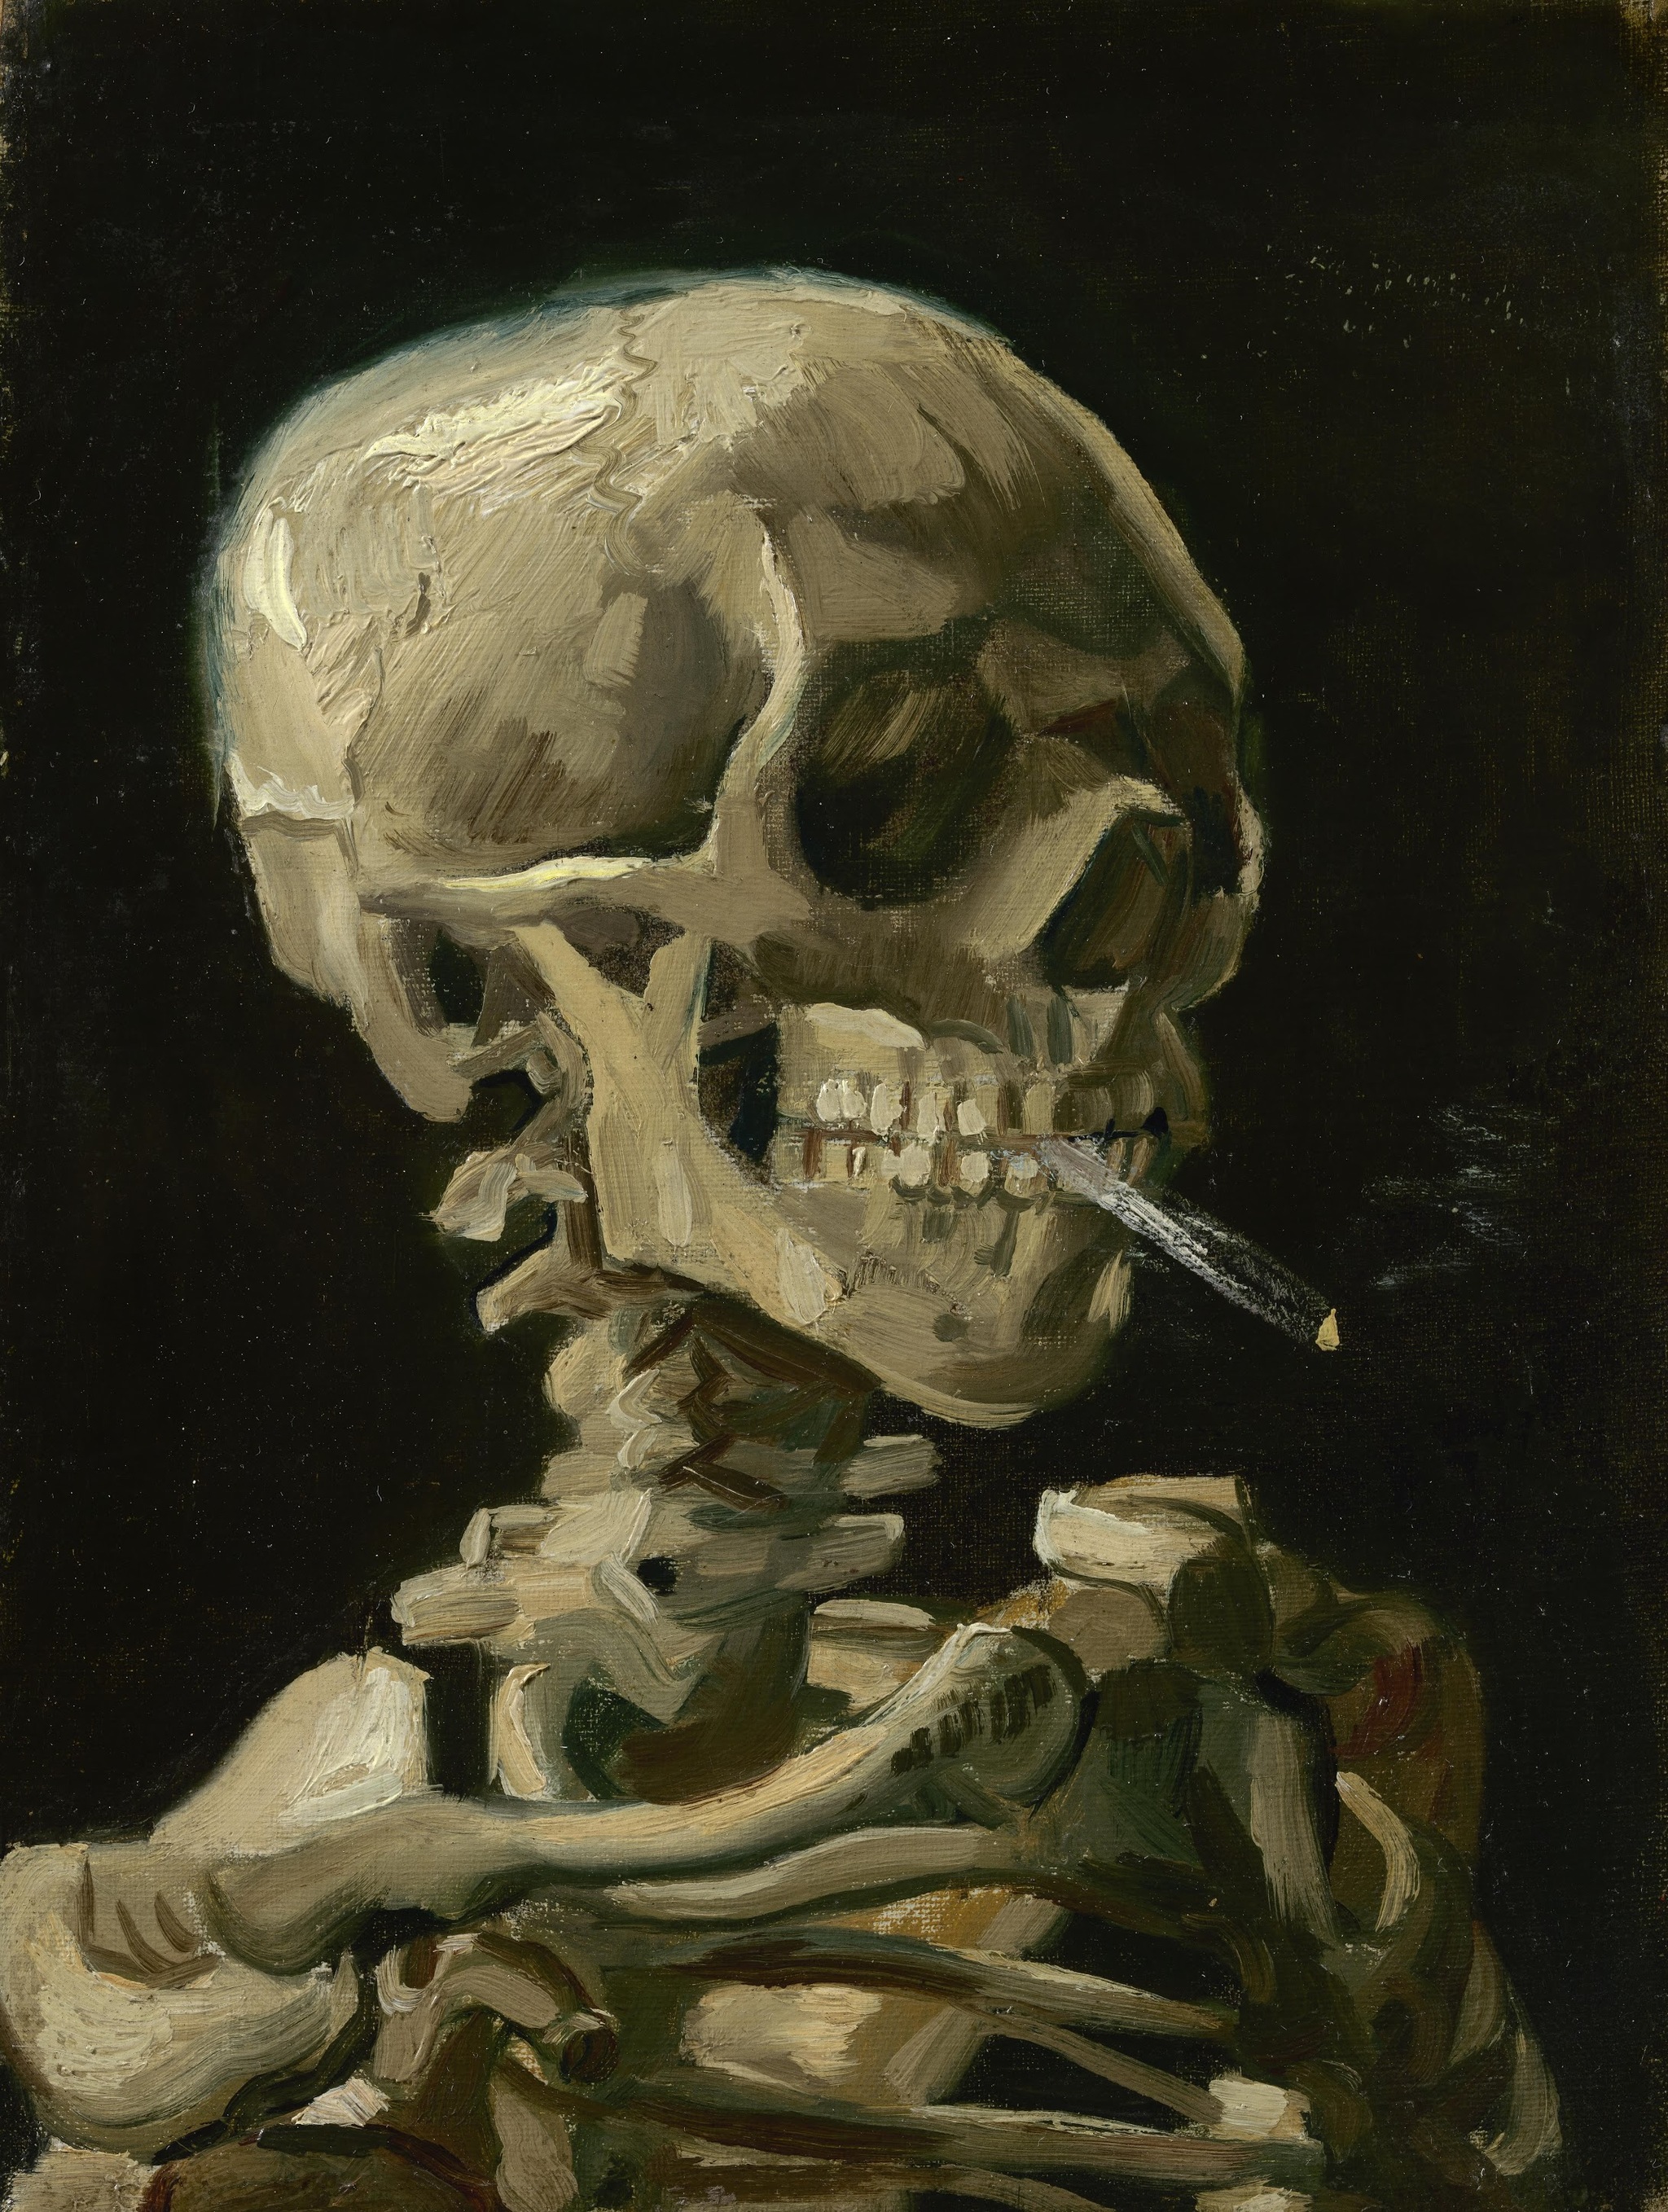 Smoking Skeletons, Smoking and Skeletons - Skeleton, Cigarettes, Art, Drawing, Help, Search, Aesthetics, Fetishism, Longpost